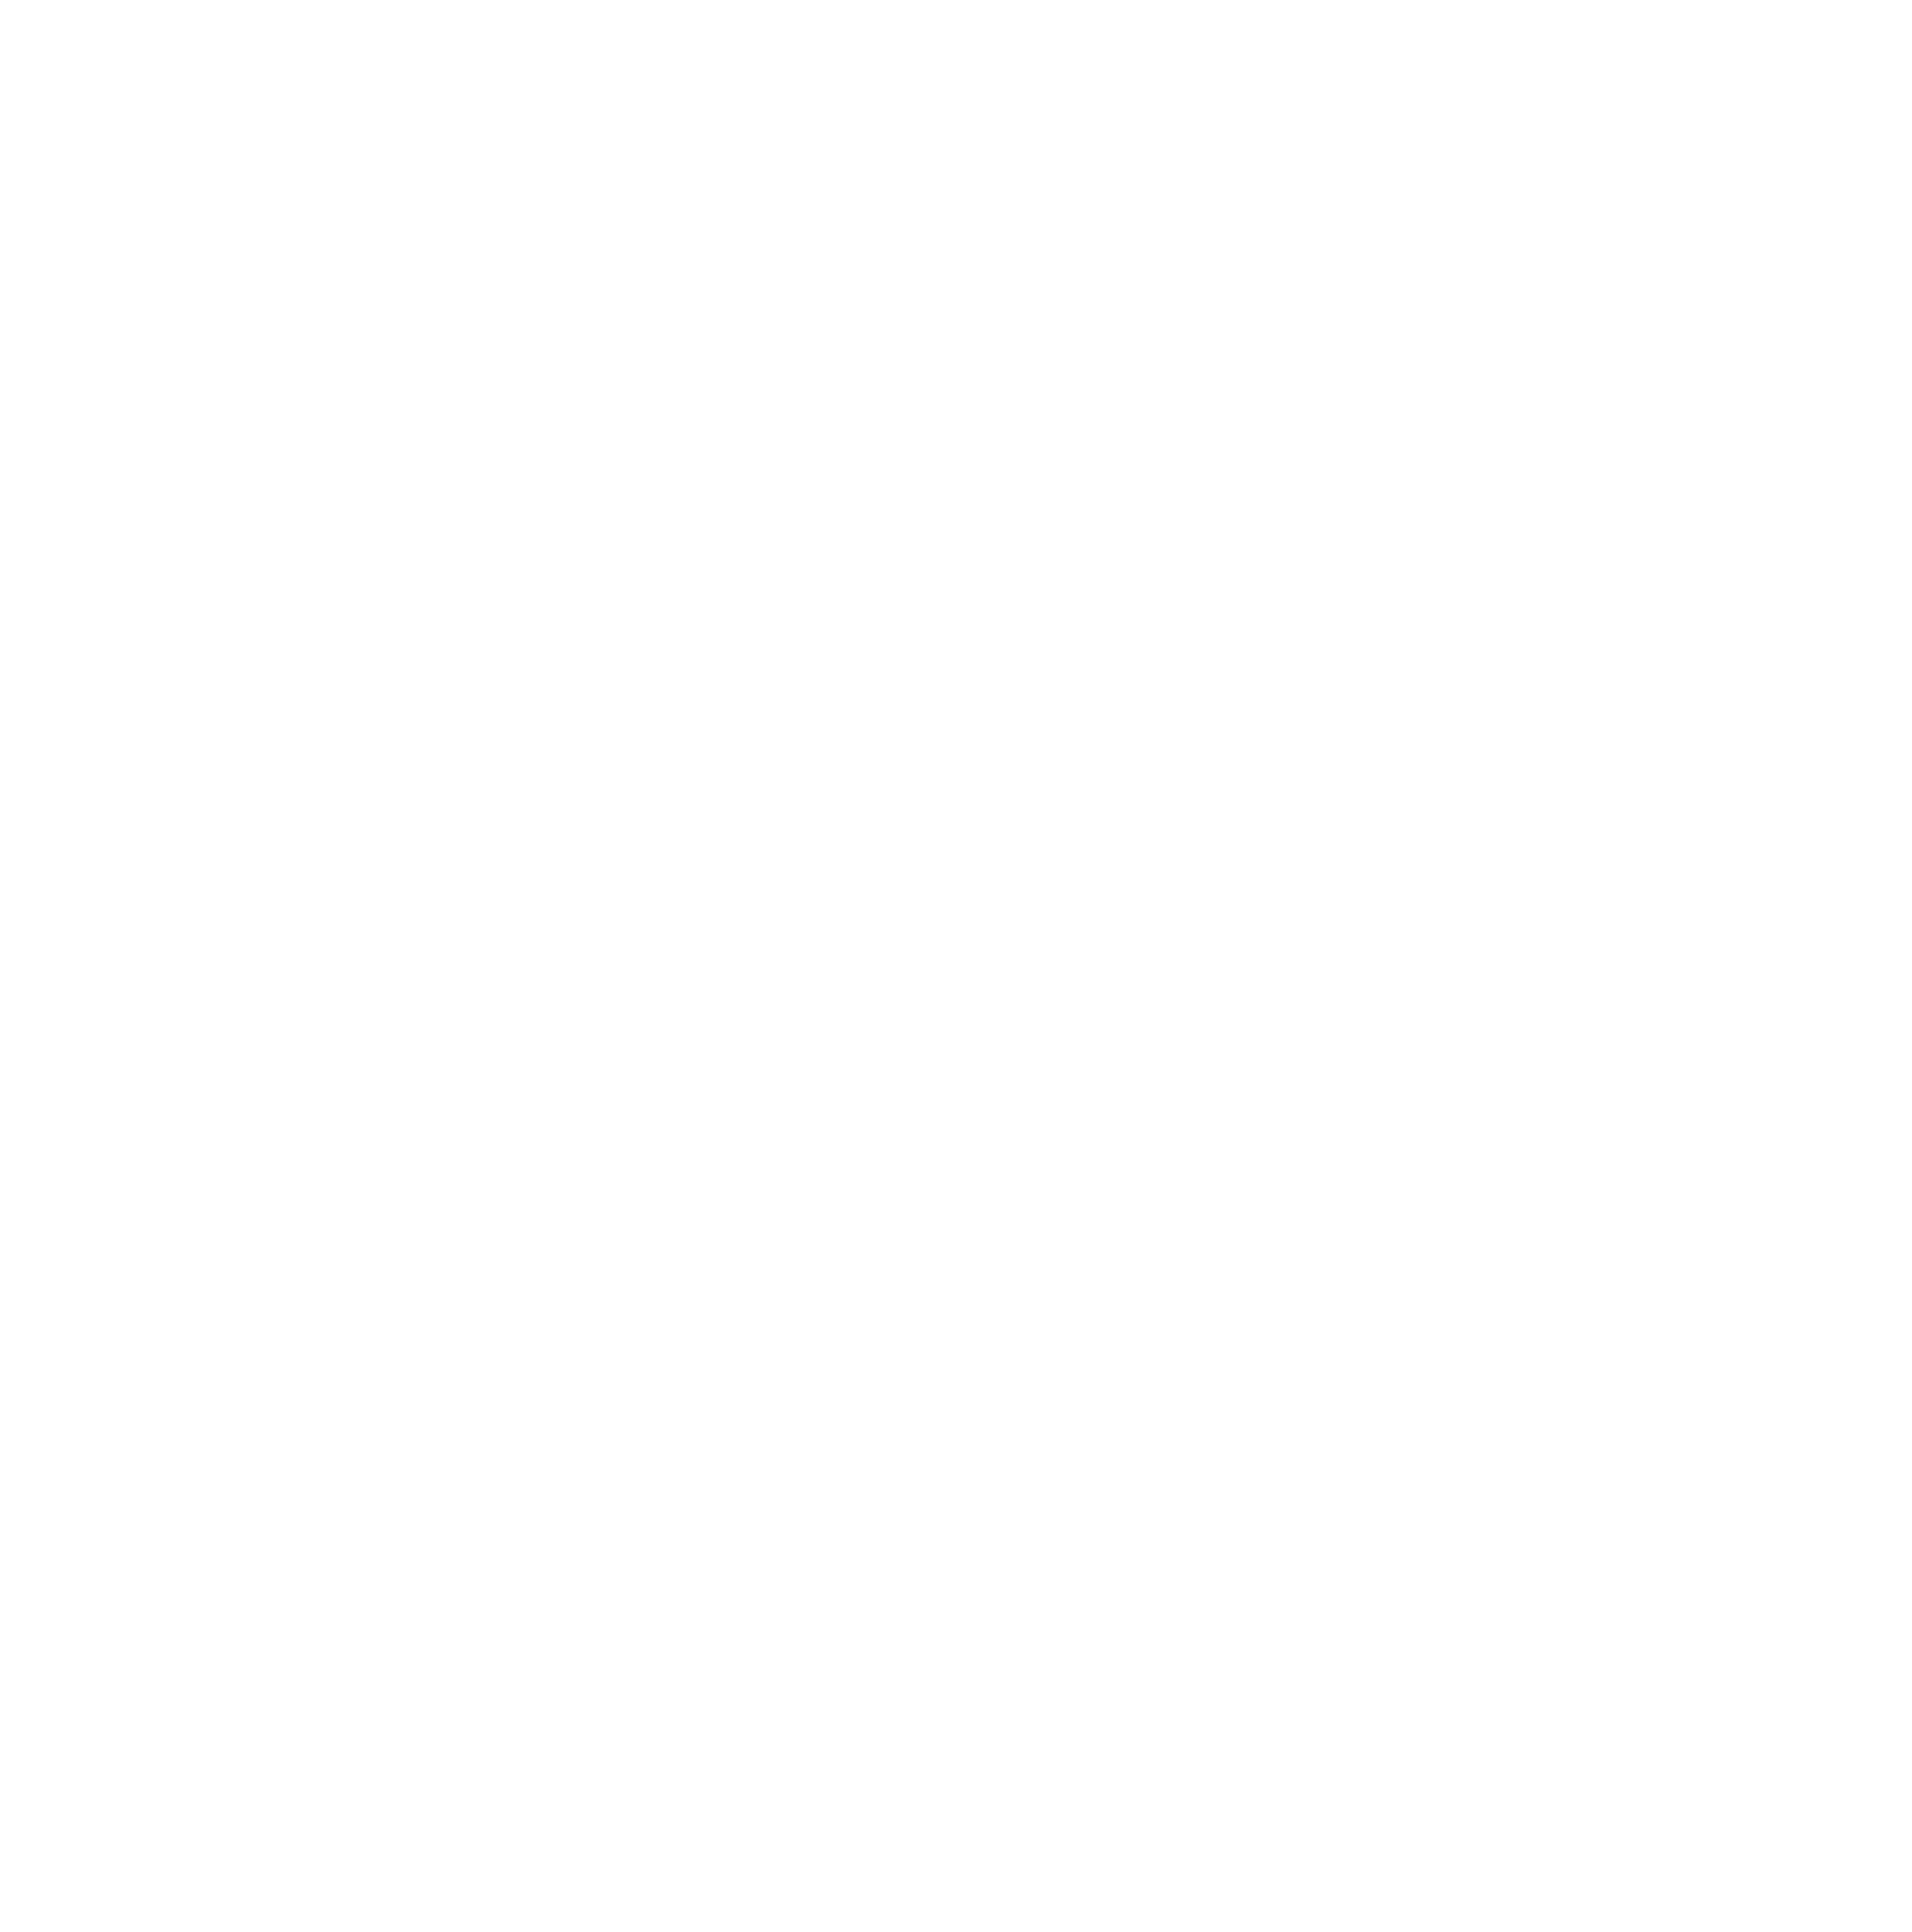 Maclean Movement - Holistic personal training & coaching